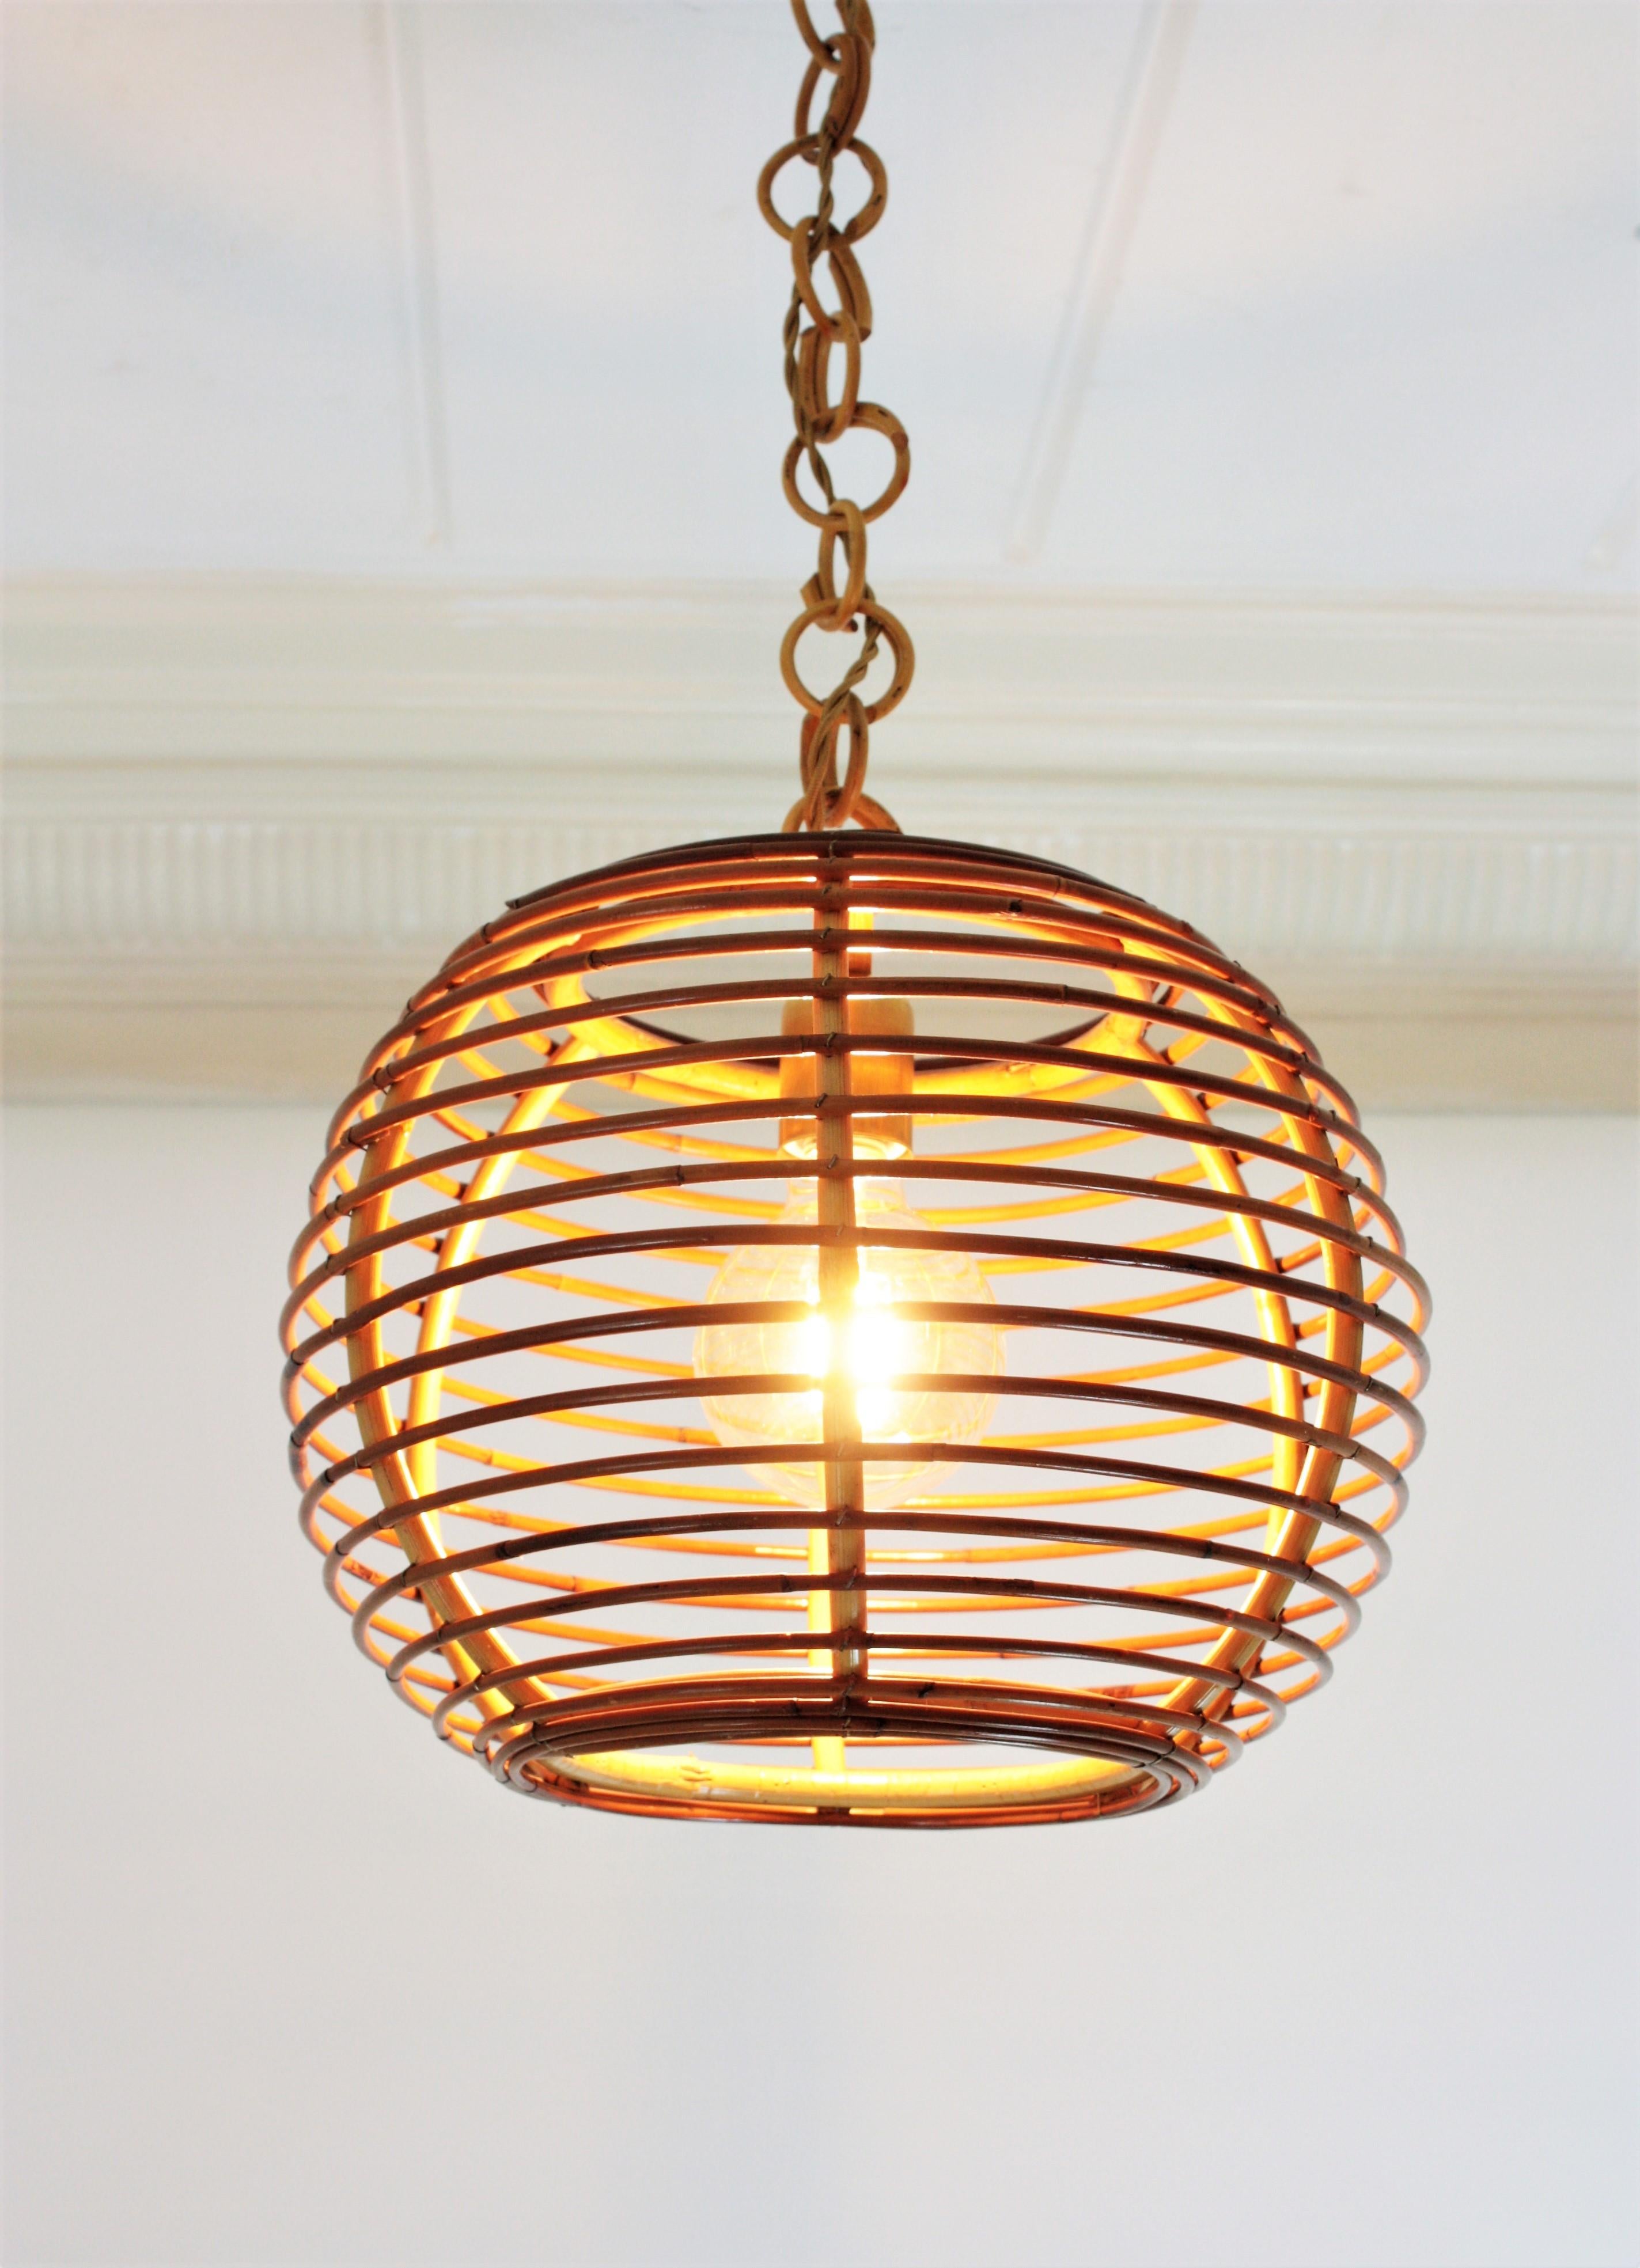 Rattan Globe Pendant or Hanging Light, Spain, 1960s For Sale 3